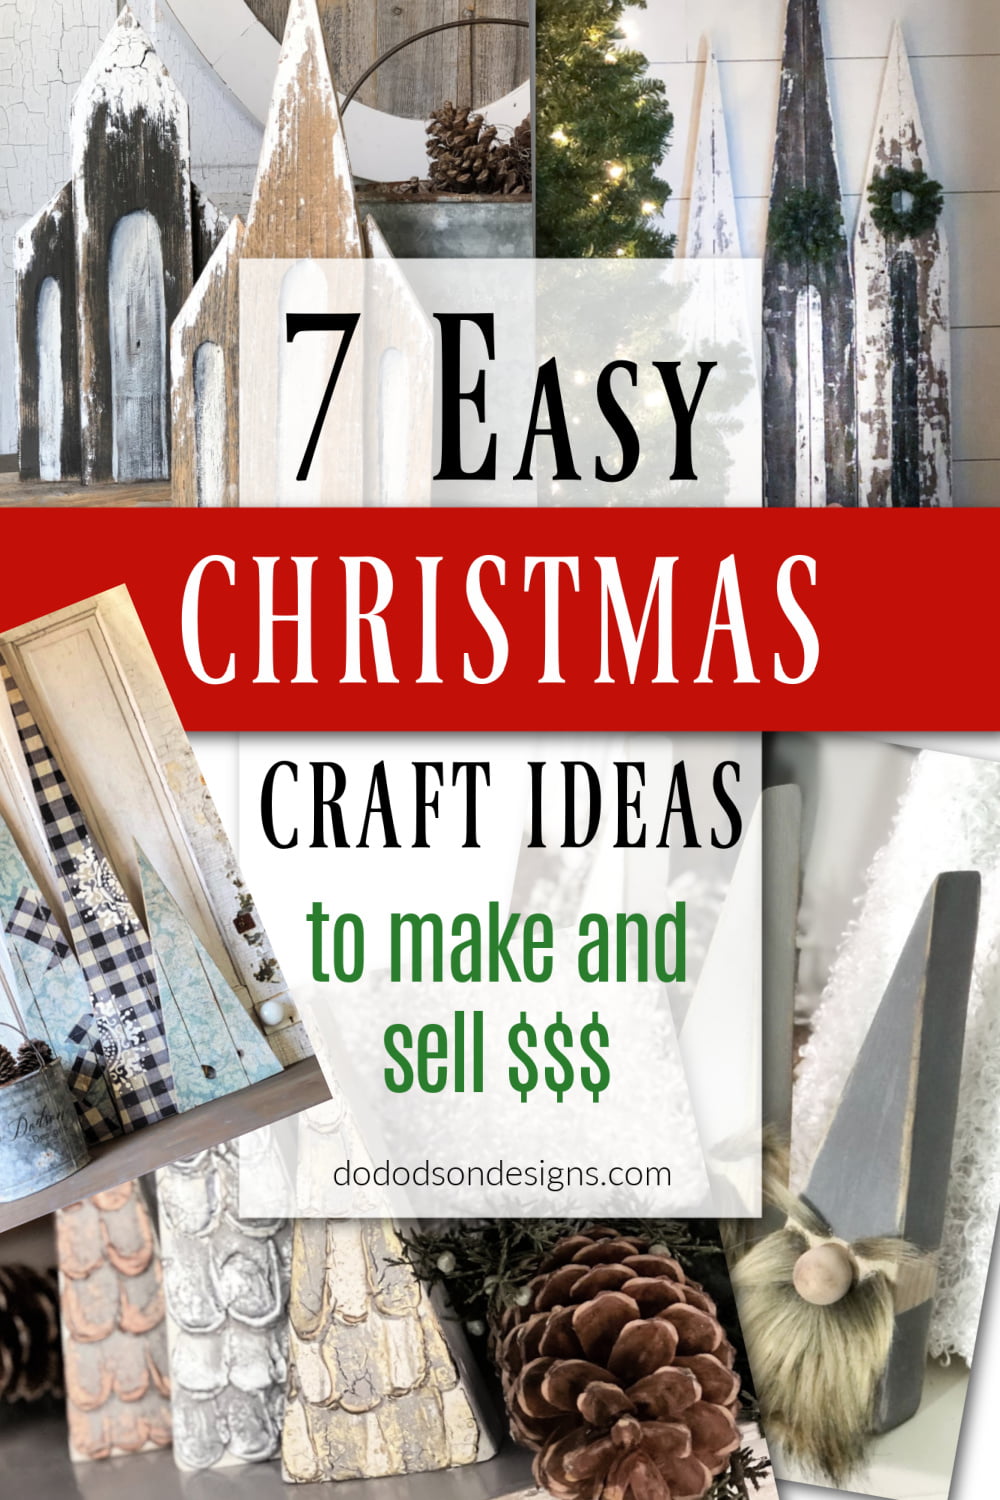 https://www.dododsondesigns.com/wp-content/uploads/2021/11/christmas-craft-ideas-9.jpg